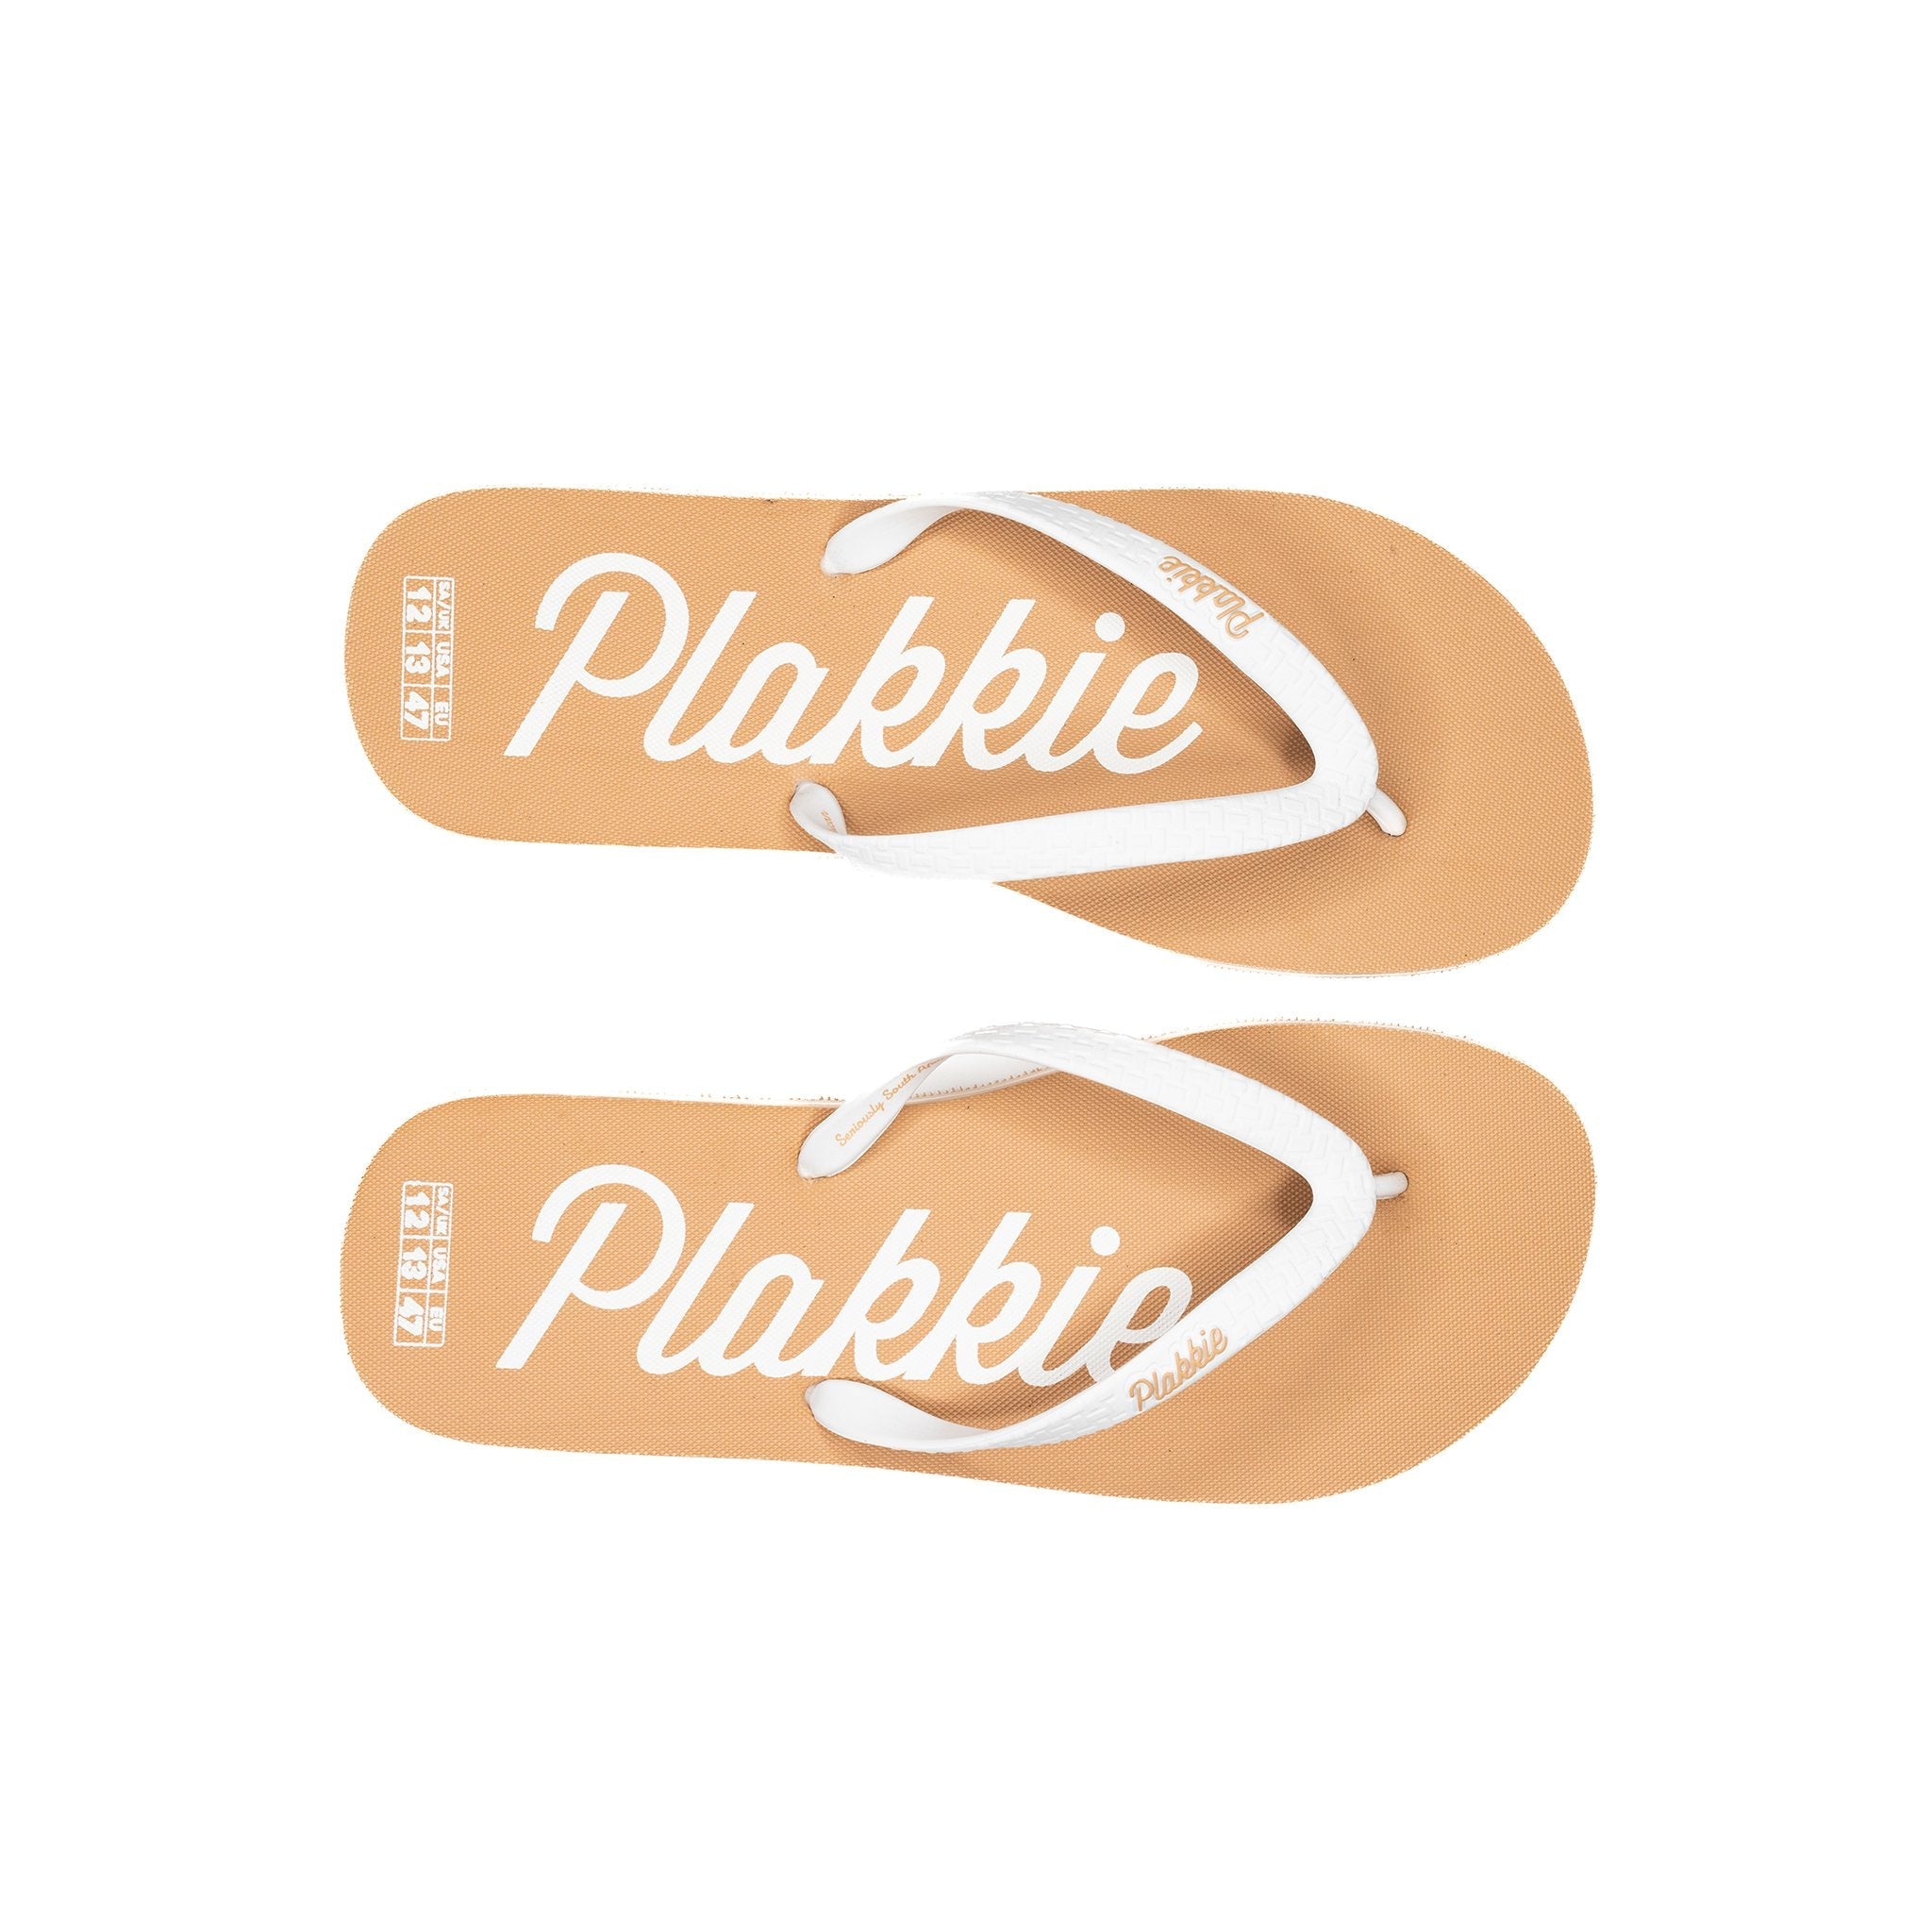 Plakkie Coffee Bay Unisex Flip Flops Sandals Plakkie 